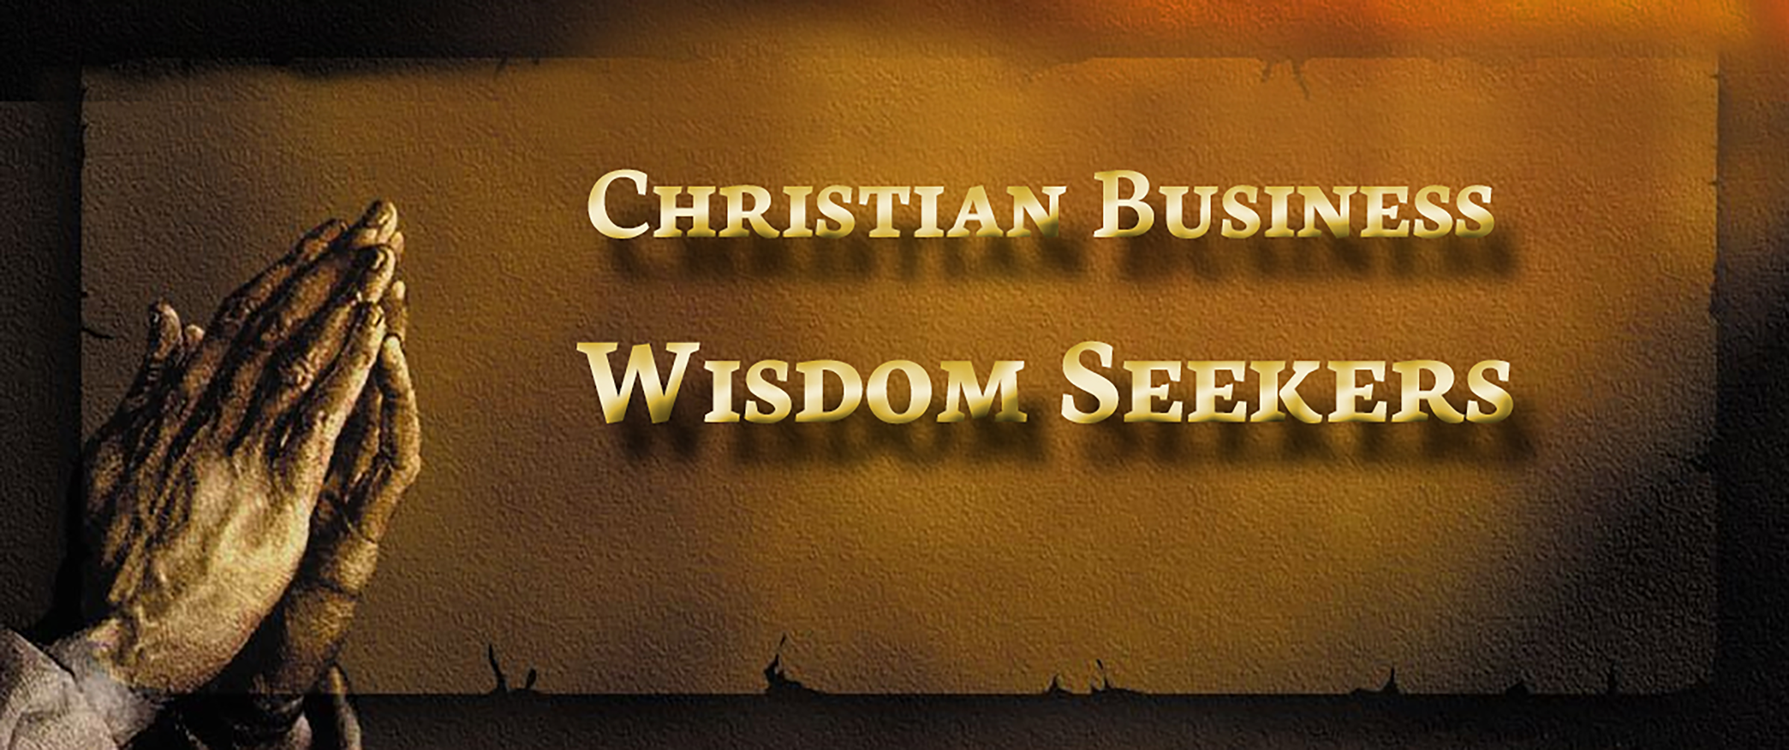 Christian Business Wisdom Seekers